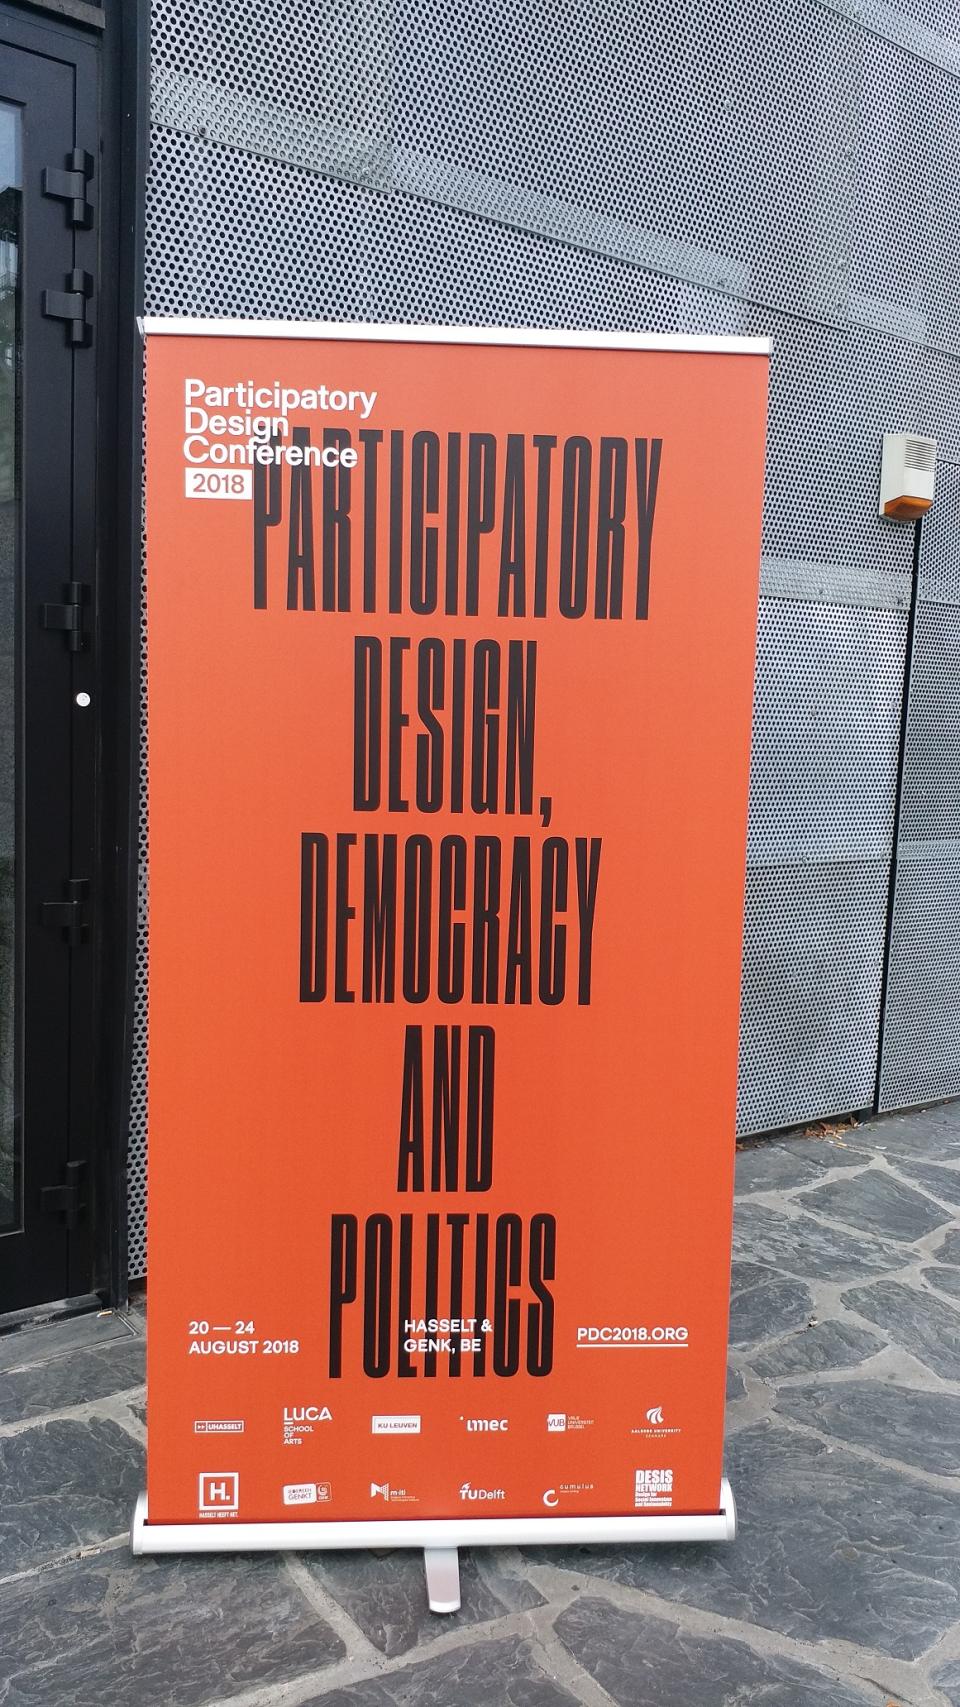 participatory design democracy and politics